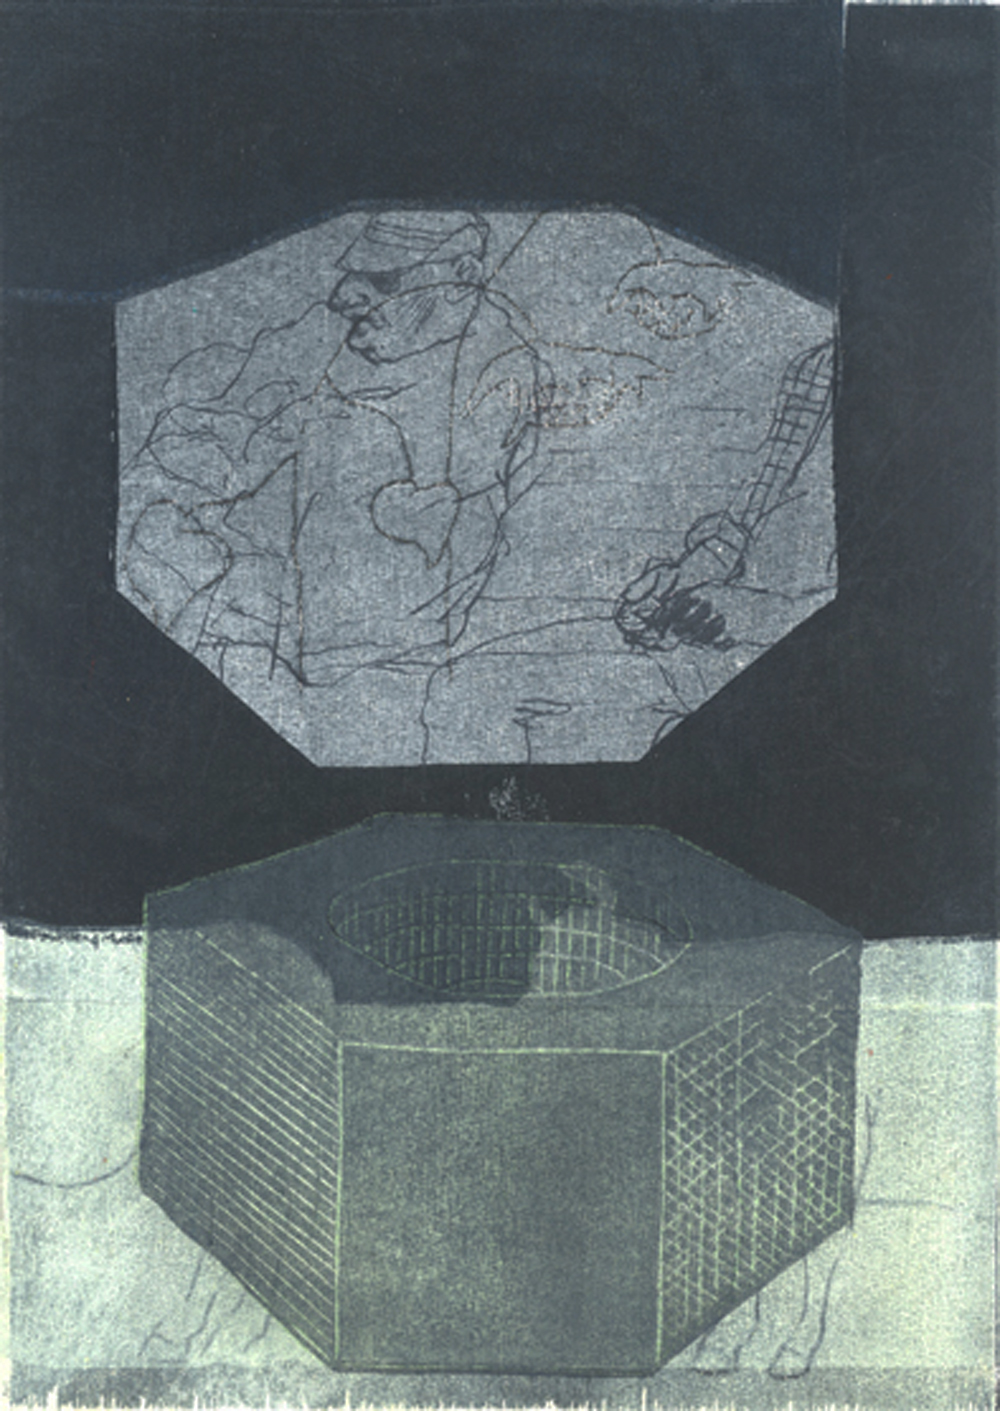 Man-ual. 21 x 30 cm. 1/1 woodcut. 2007. Sold